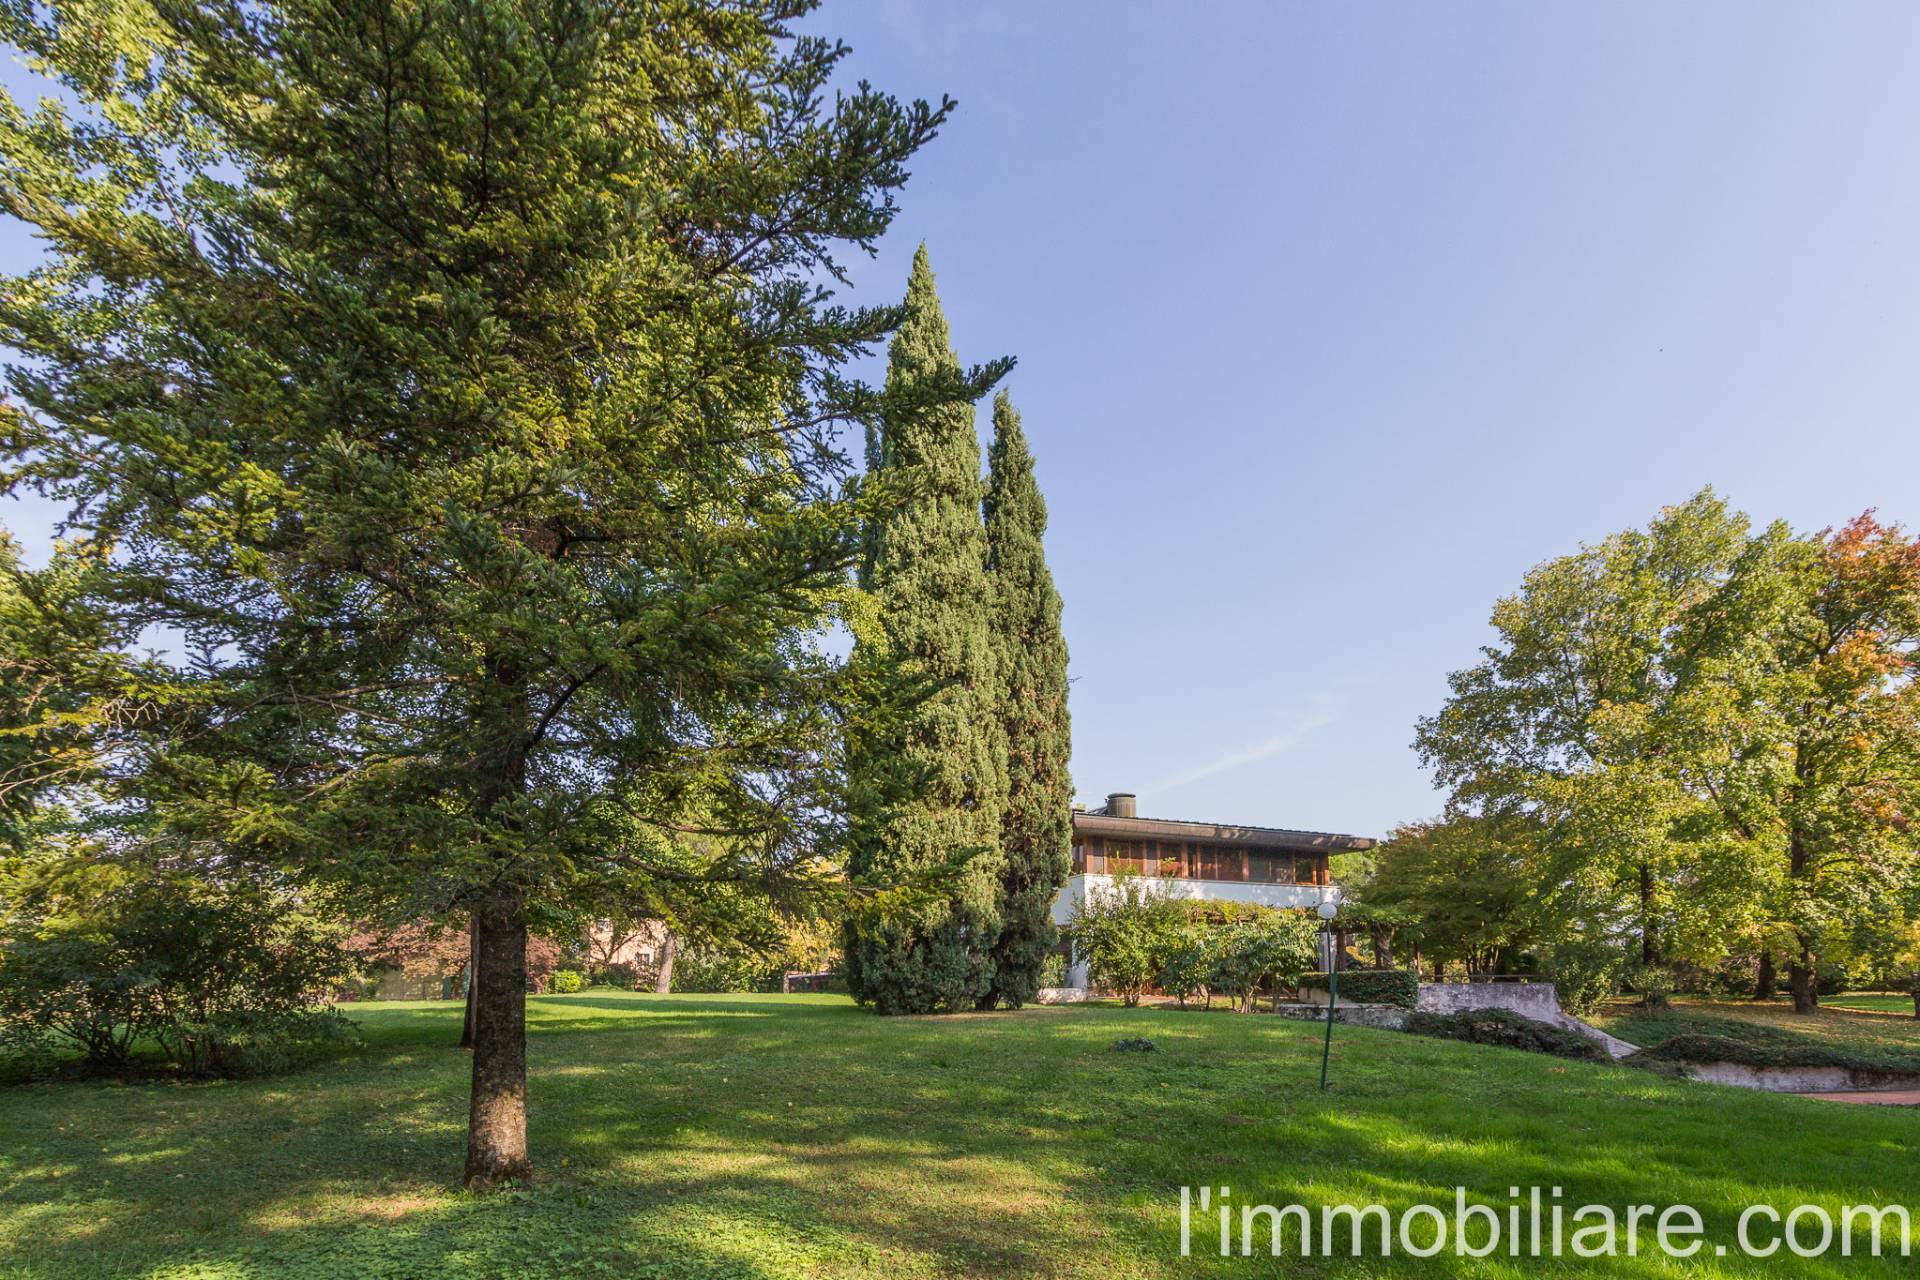 Villa in Vendita a Verona: 5 locali, 468 mq - Foto 8